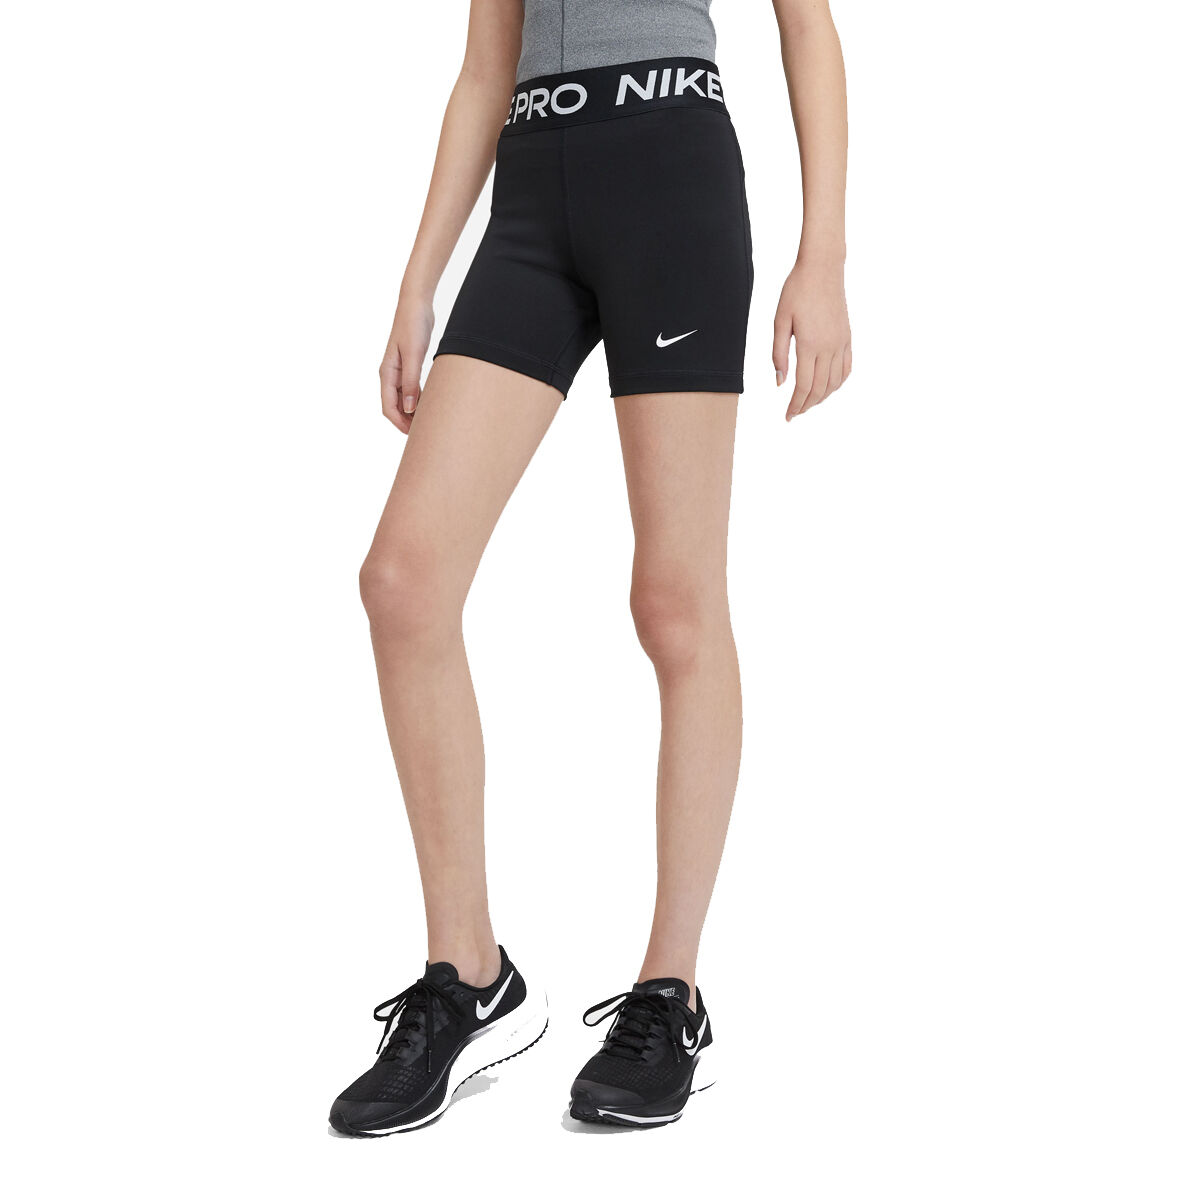 Nike Pro Girls Shorts Black XS, Black, rebel_hi-res